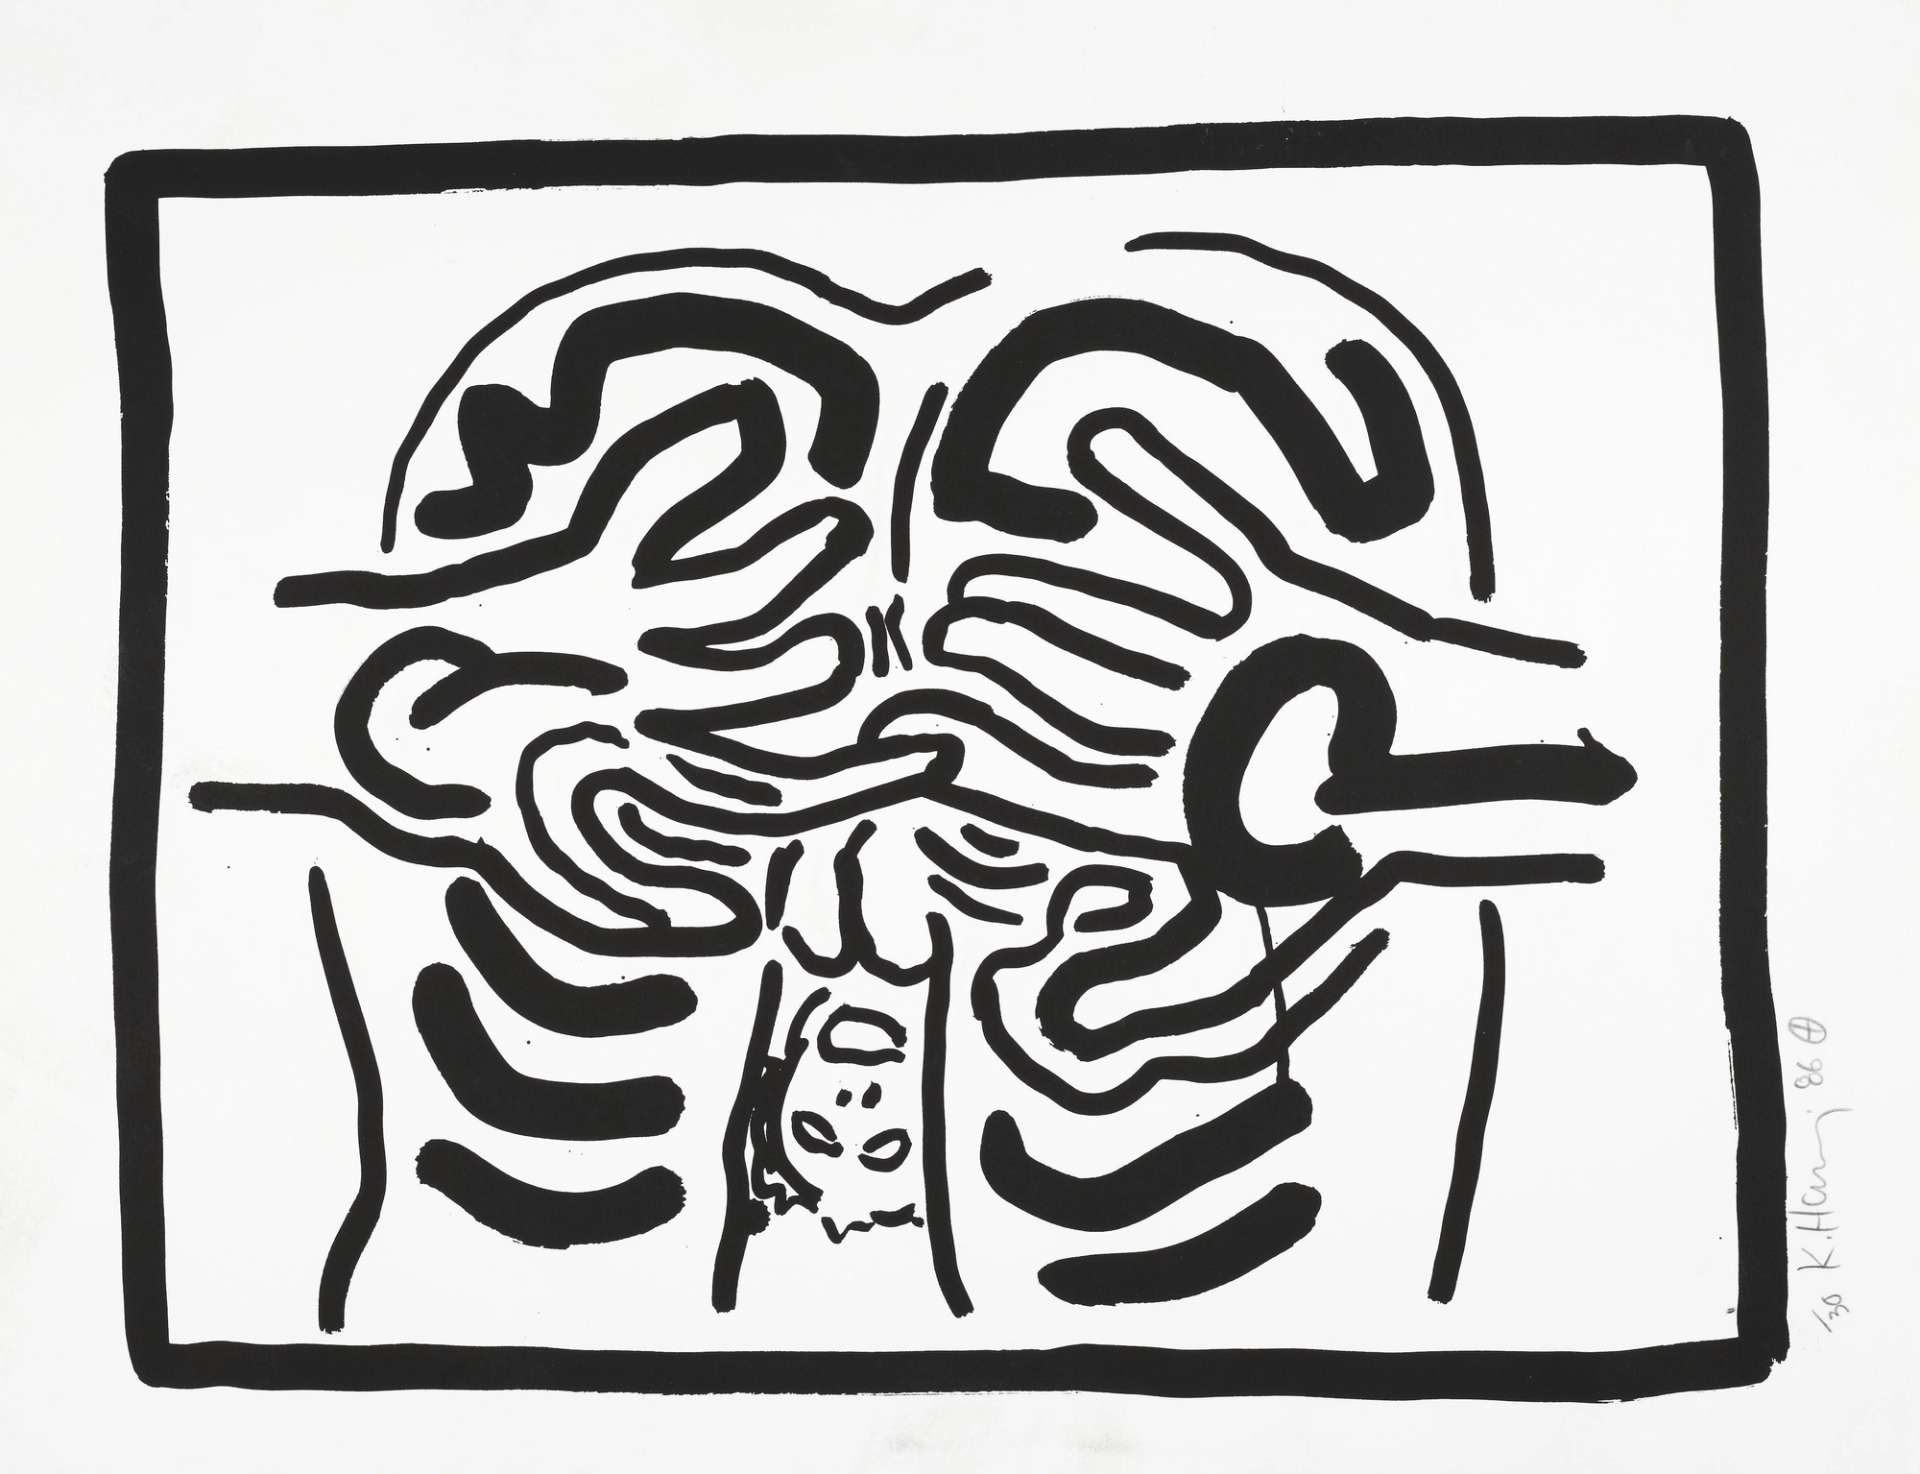 Keith Haring: Bad Boys 4 - Signed Print